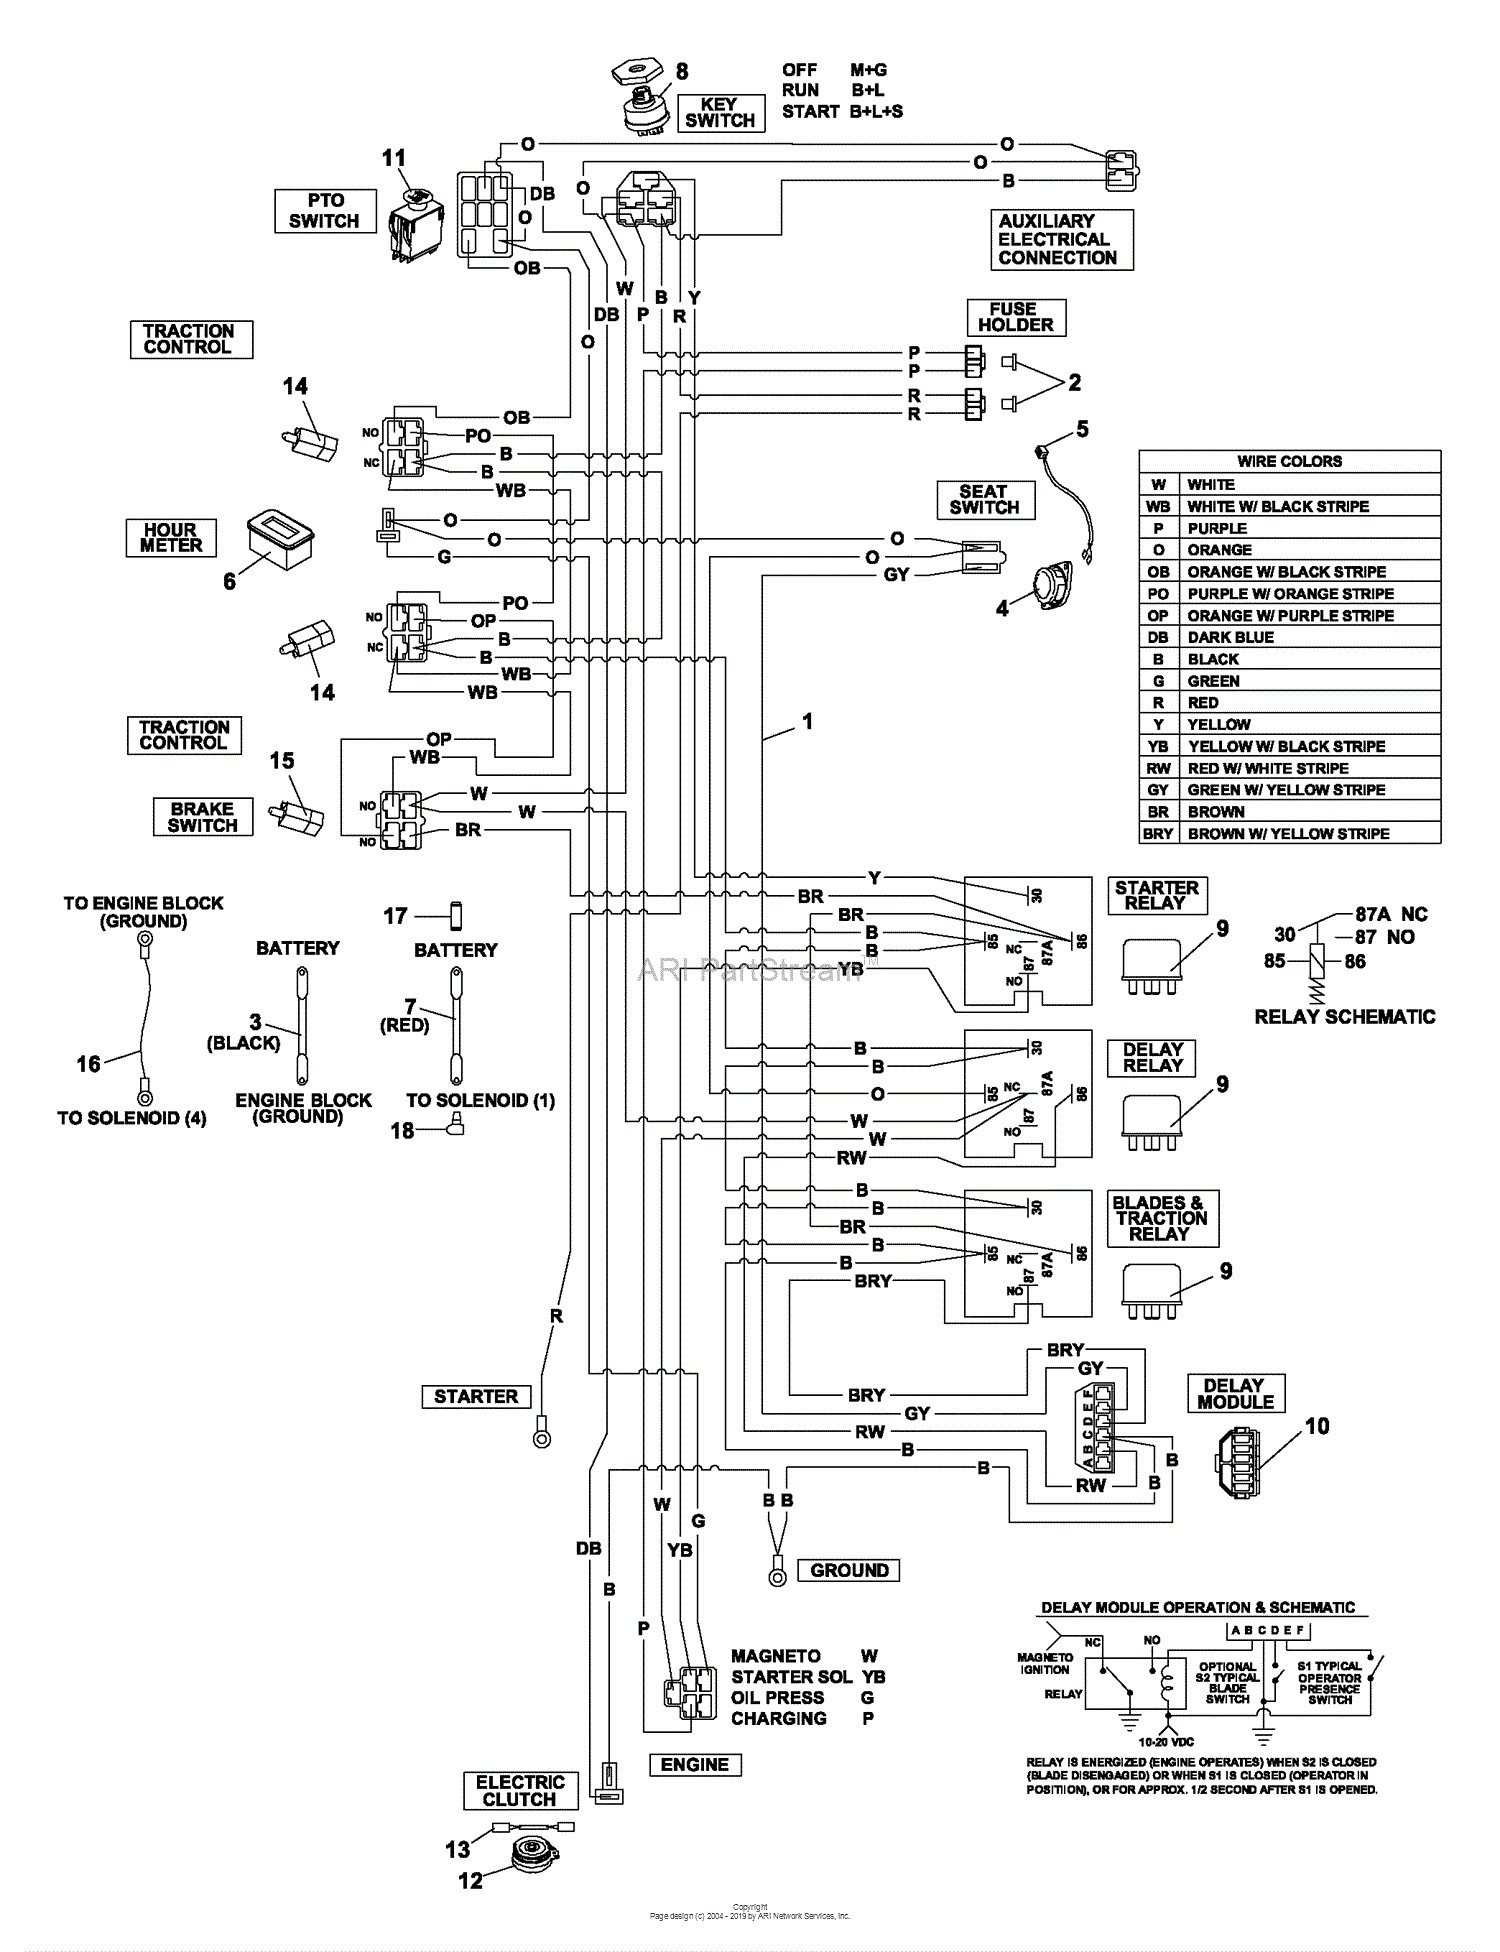 Steelmate Car Alarm Wiring Diagram 4d2c0b 159 69 3 193 1992 Rodeo Wiring Diagram Of Steelmate Car Alarm Wiring Diagram